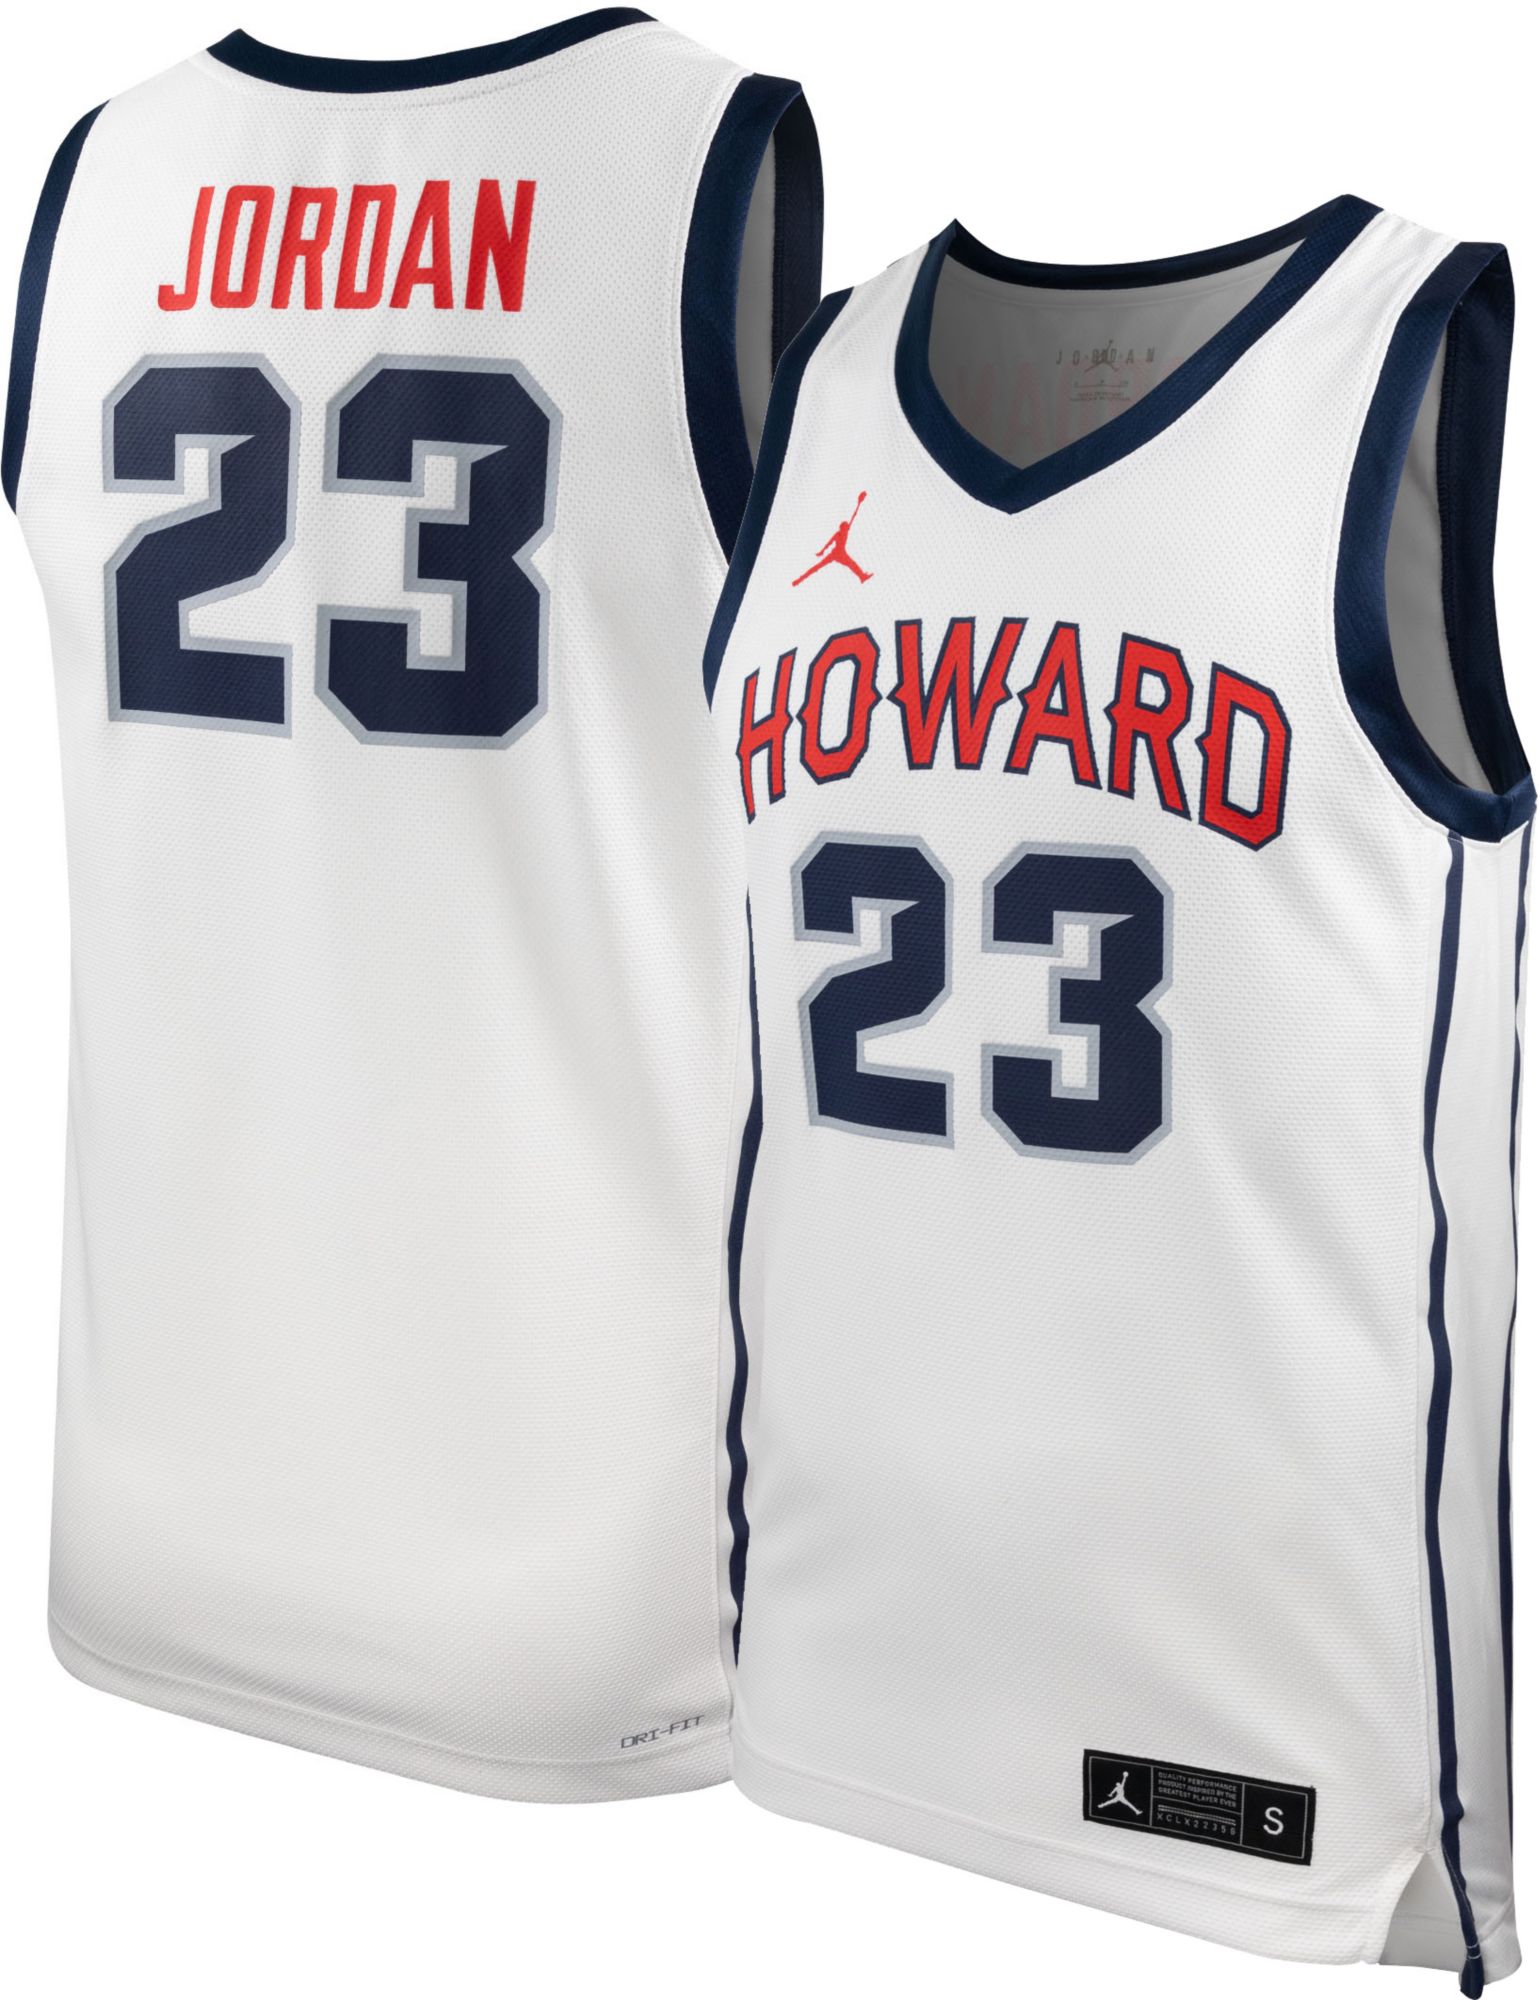 Battle Jordan replica jersey